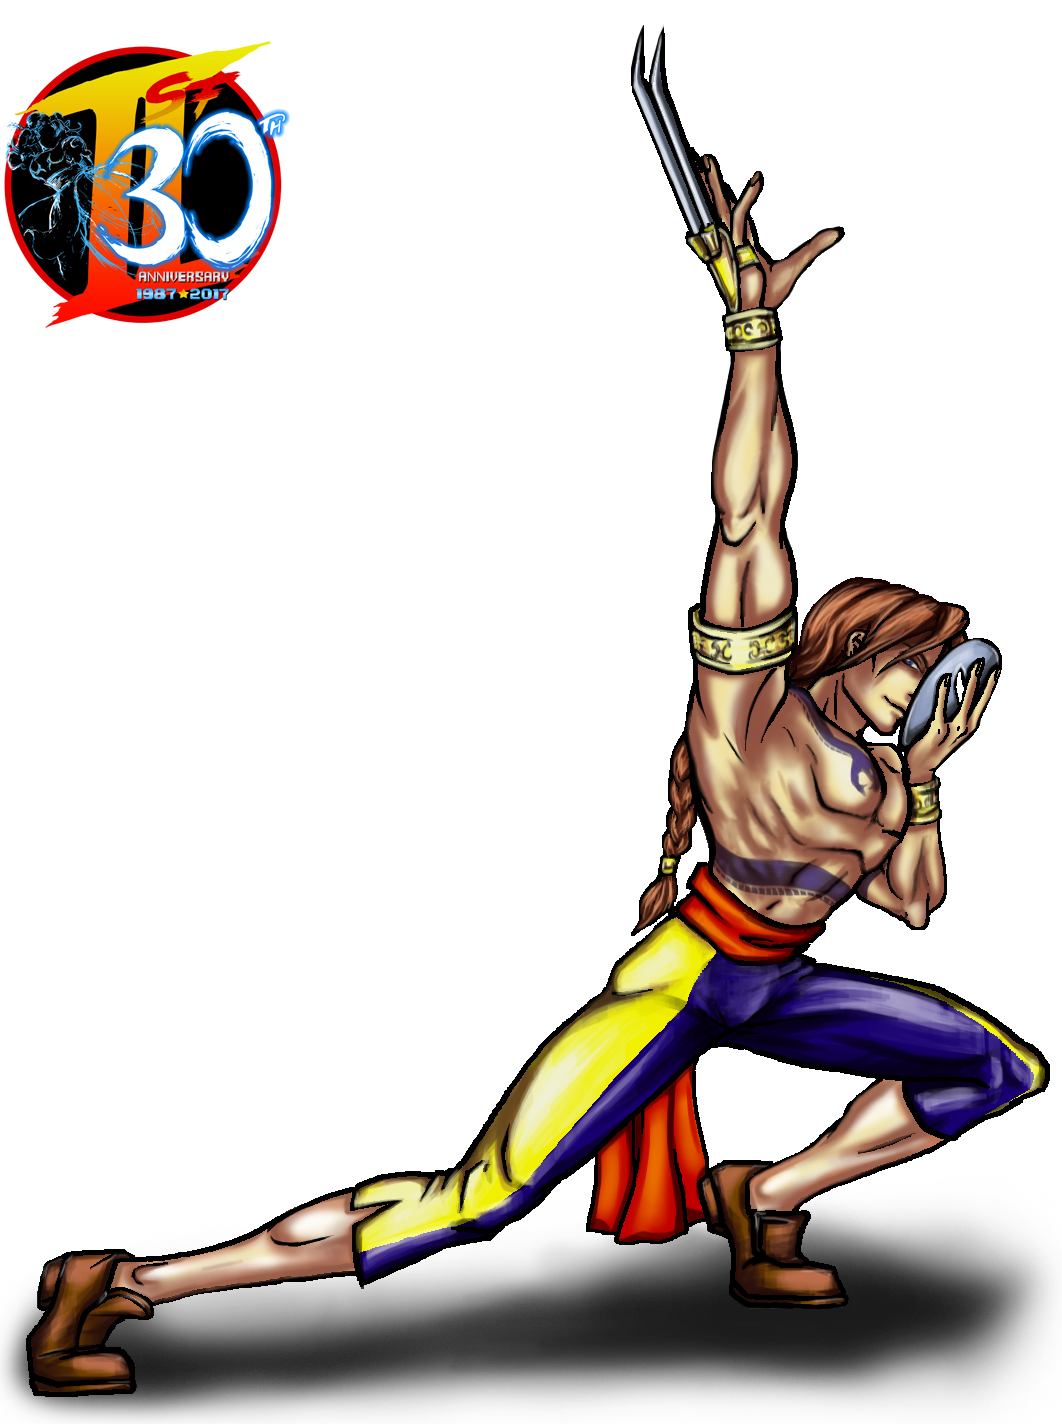 Super Street Fighter II - Vega | Art Board Print